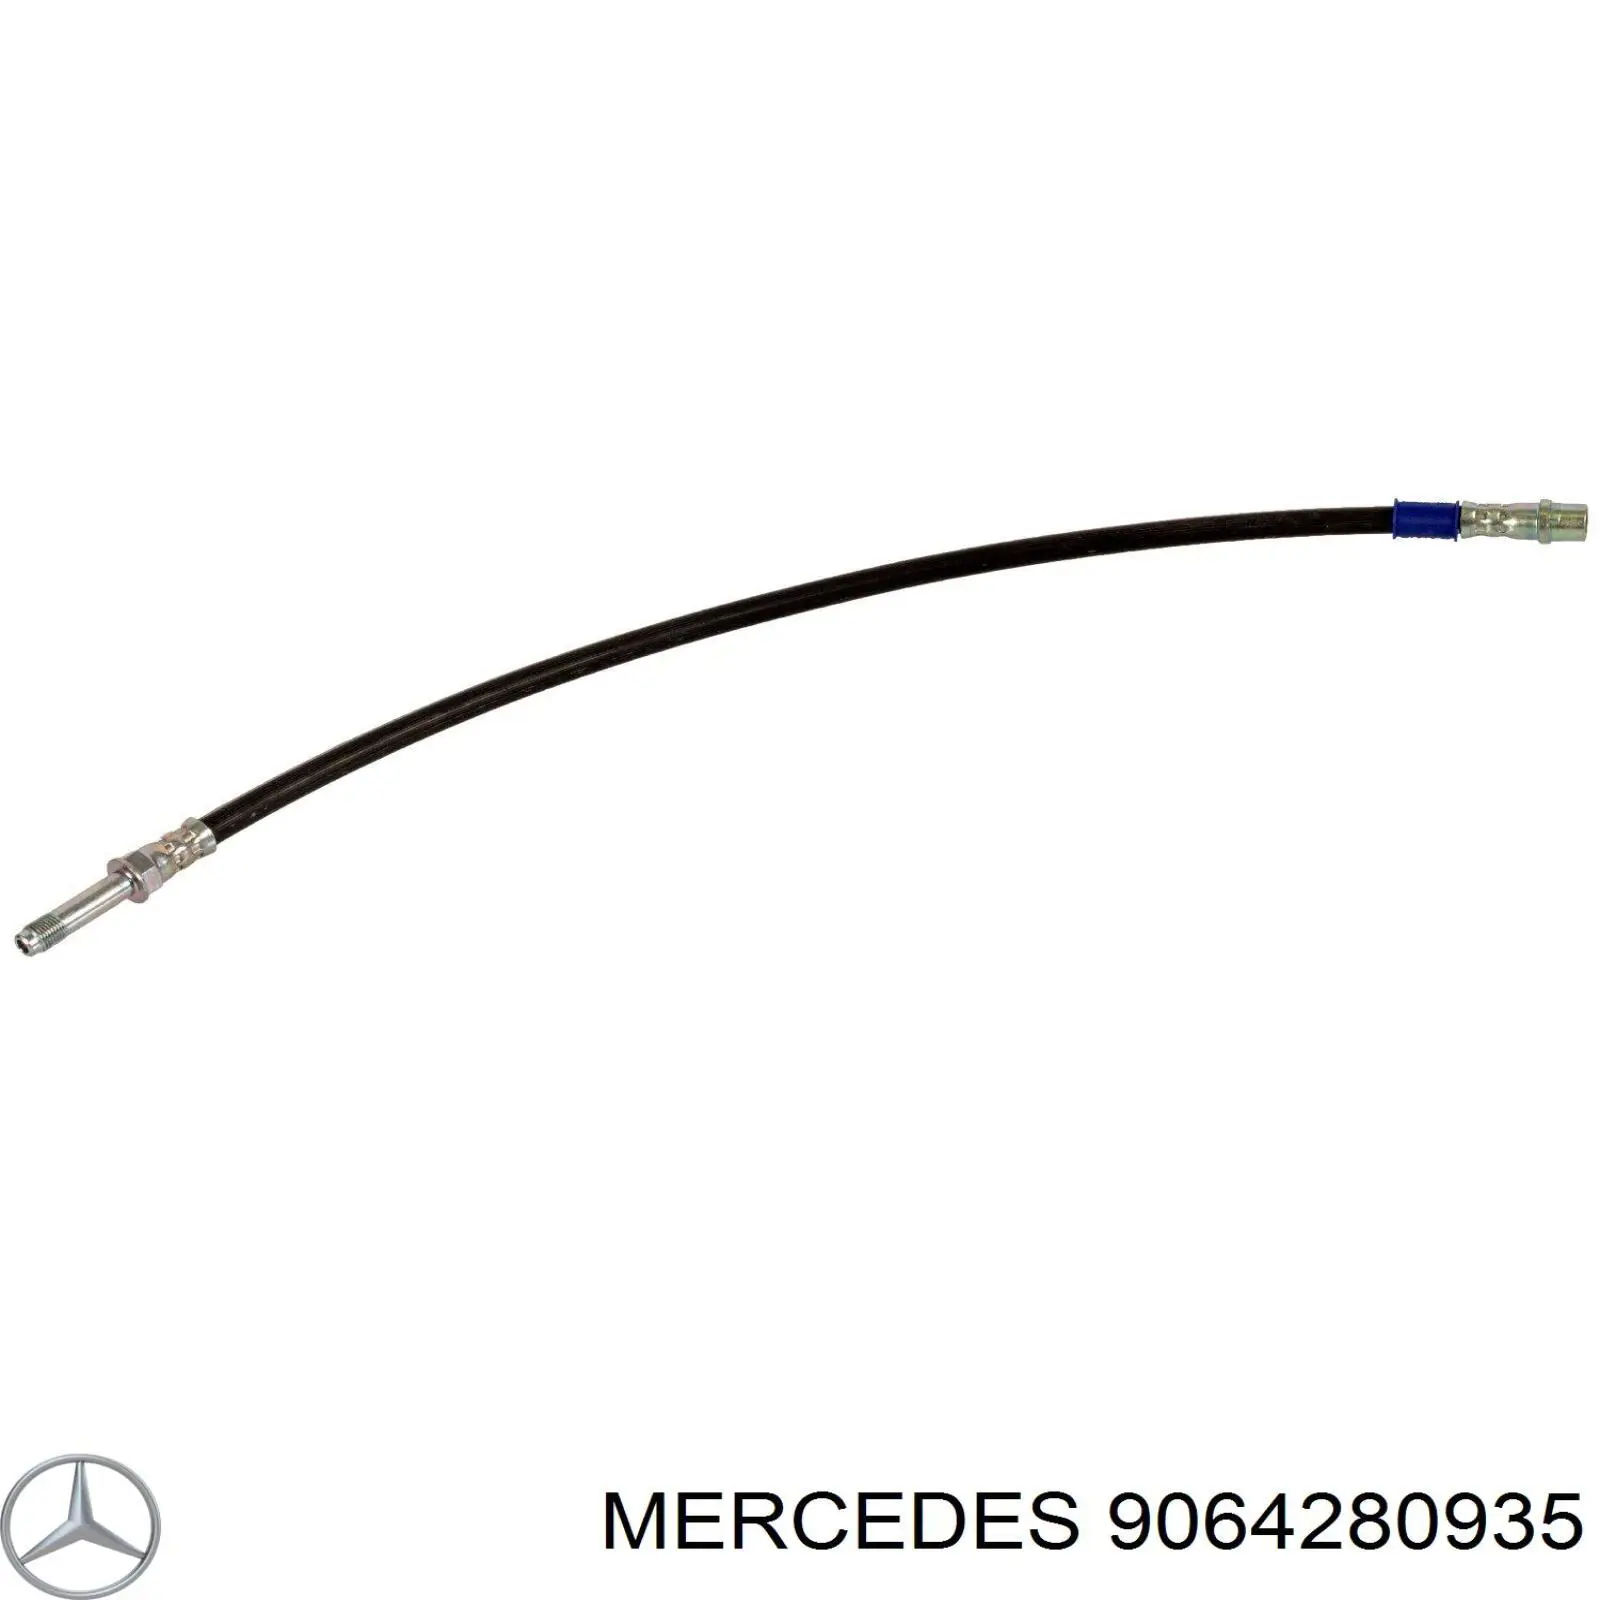 9064280935 Mercedes latiguillo de freno delantero